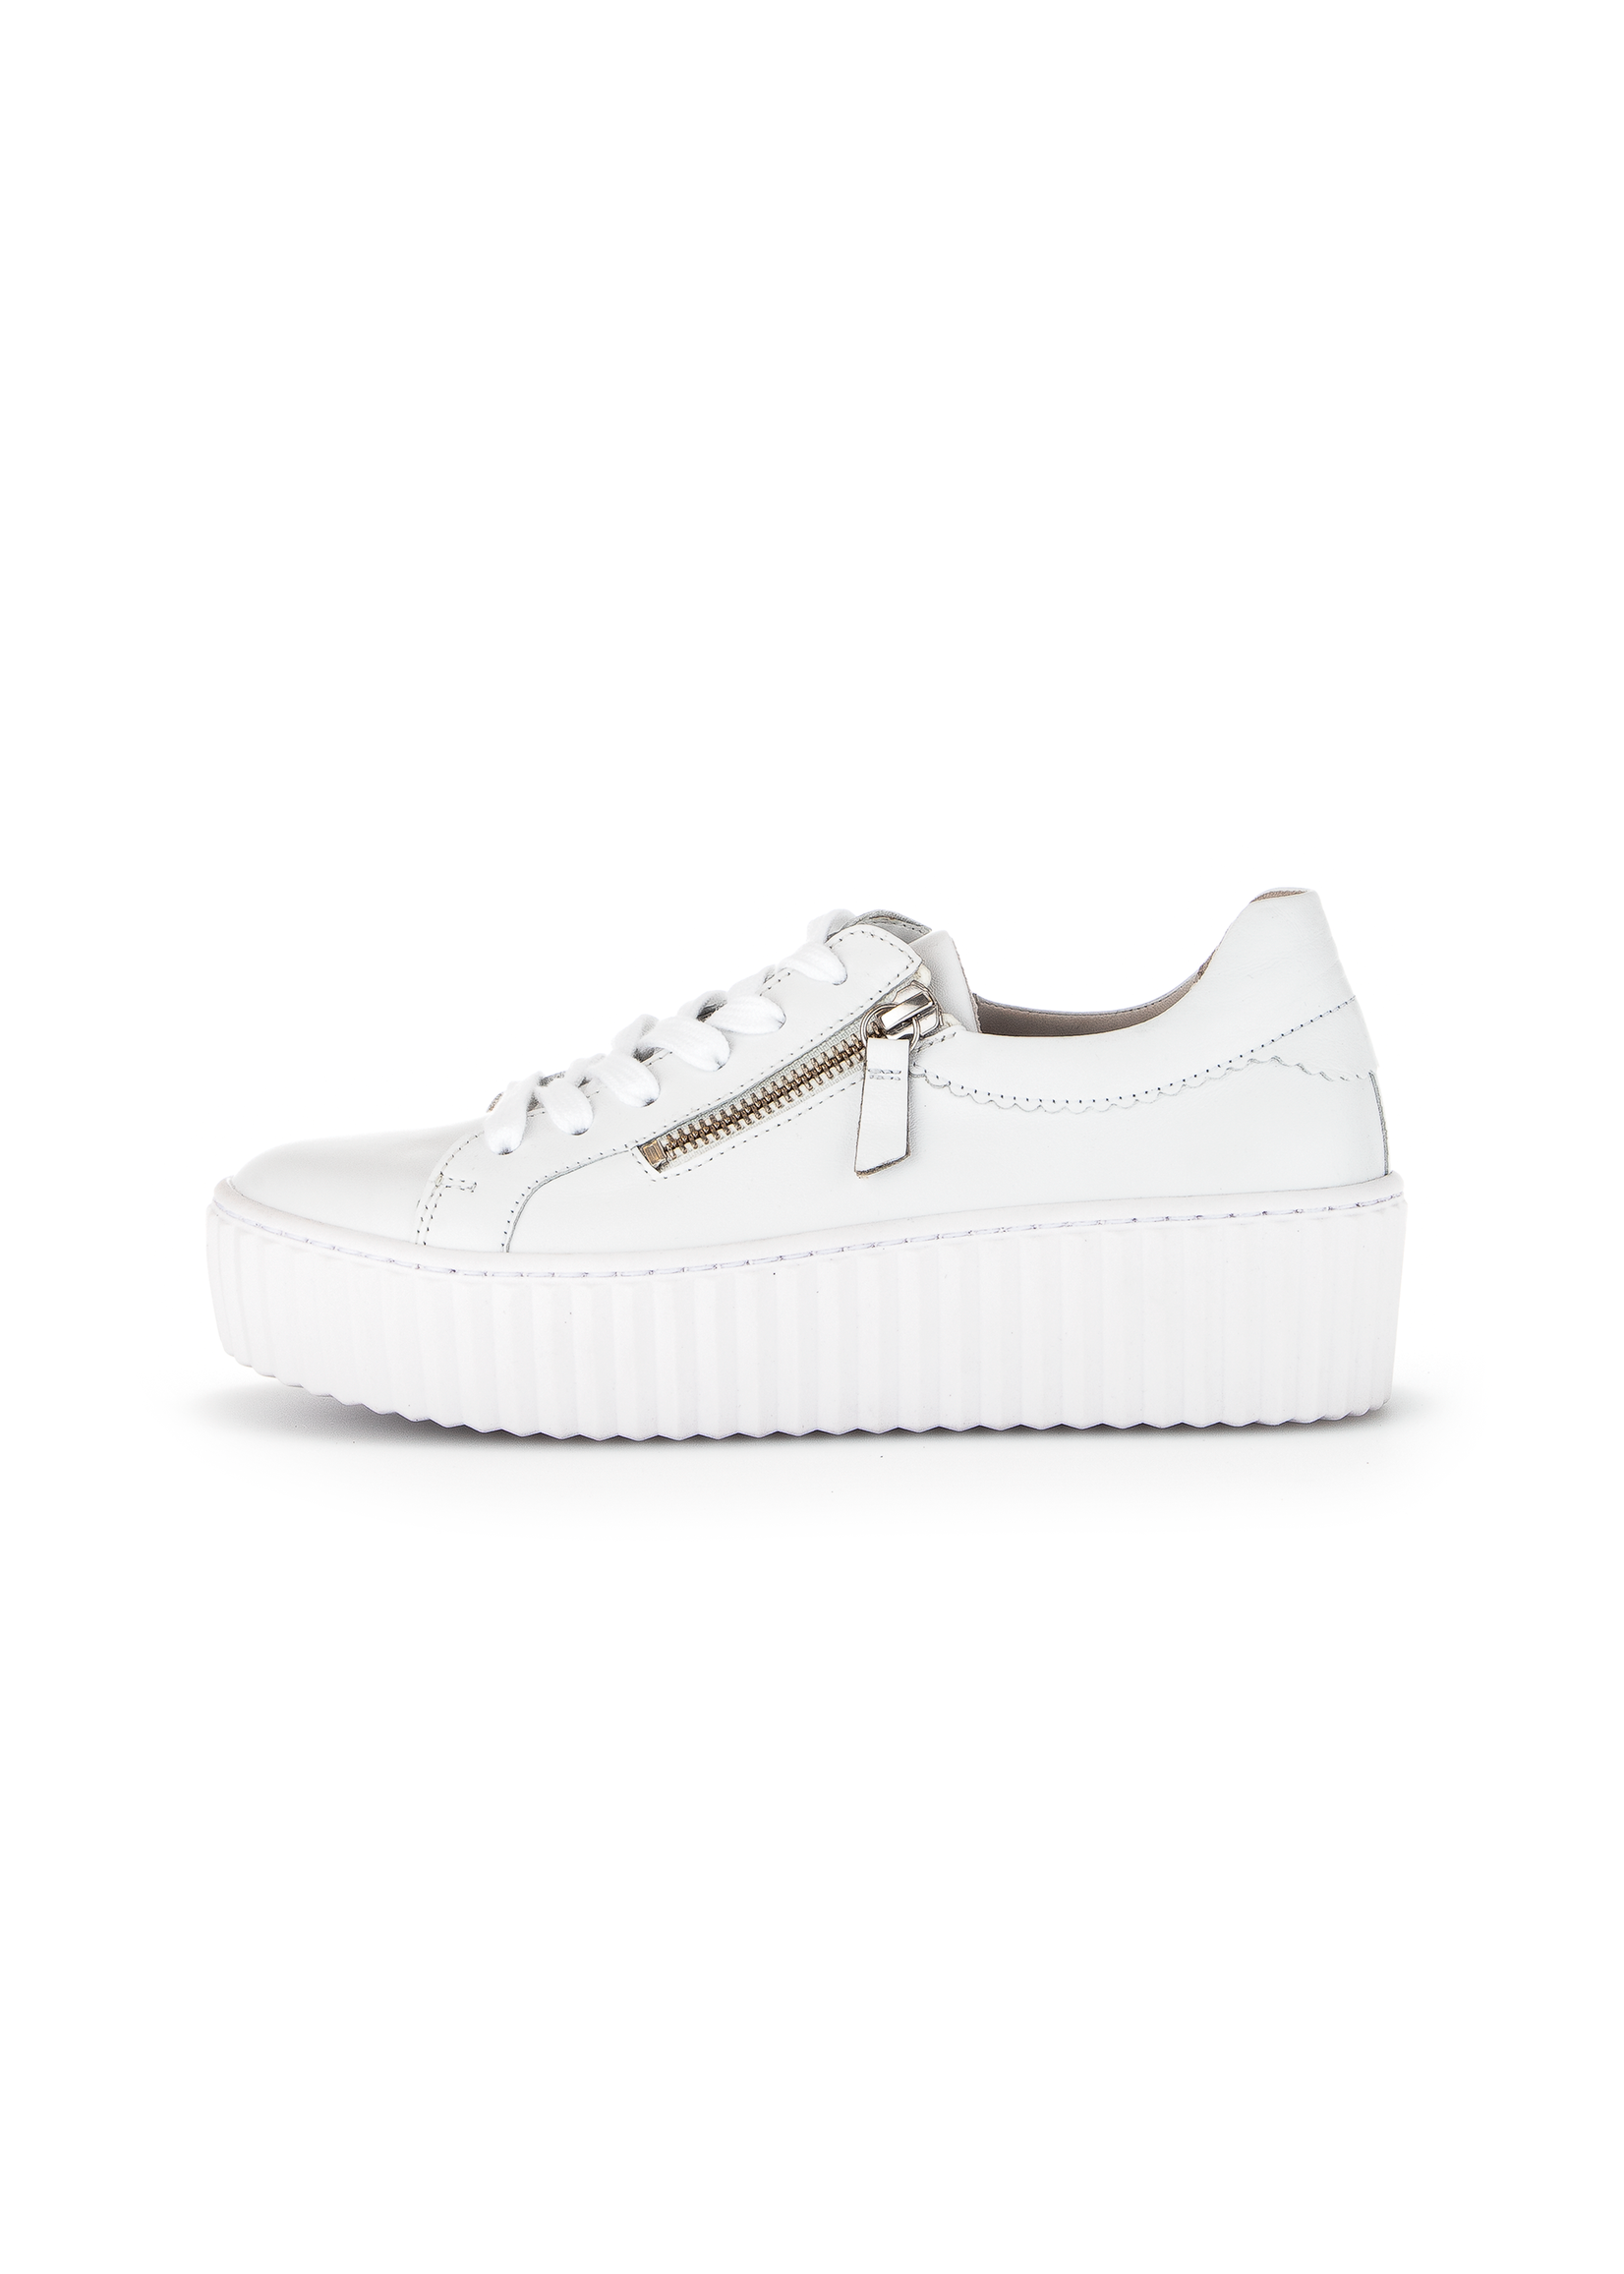 Gabor women's leather sneaker - white | Robel.shoes